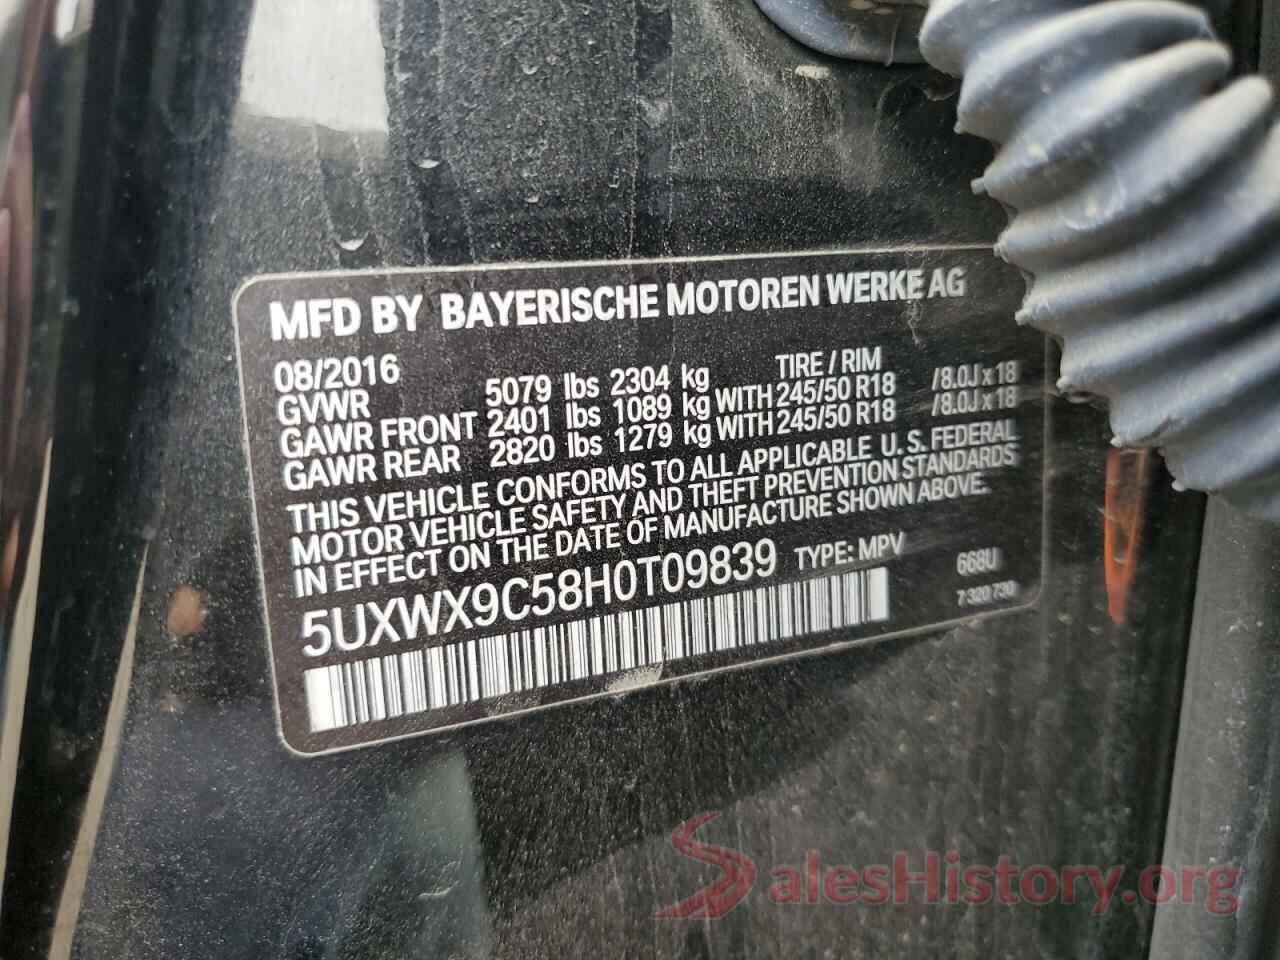 5UXWX9C58H0T09839 2017 BMW X3